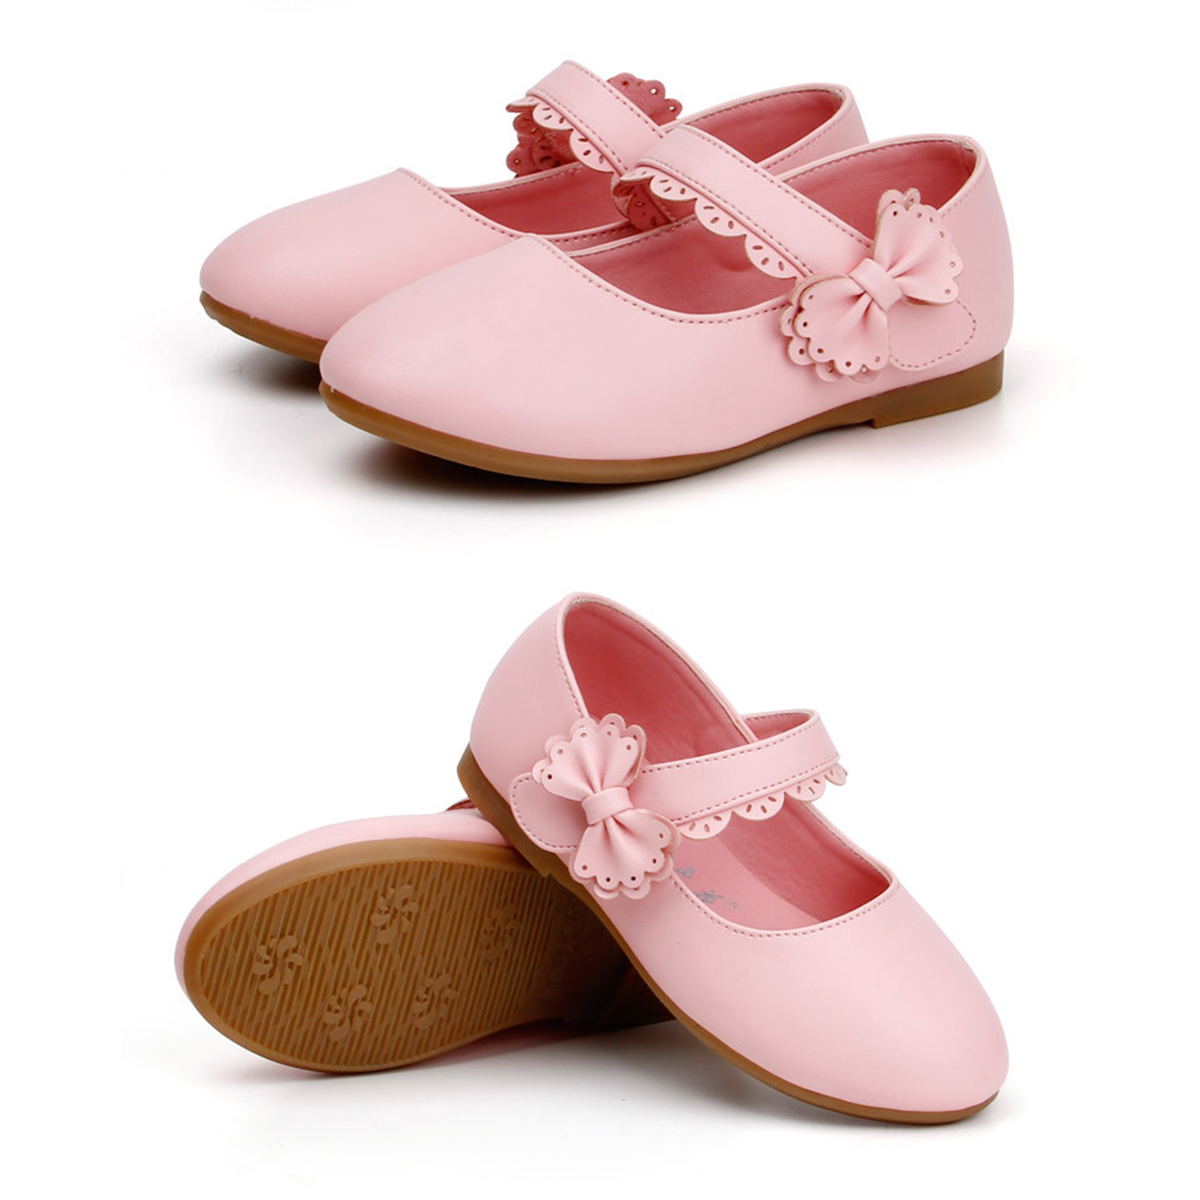 Hawee Ballet Flat Mary Jane Shoes Bowknot Princess Dress Shoes (Toddler Girls & Little Girls & Big Girls) - image 2 of 4